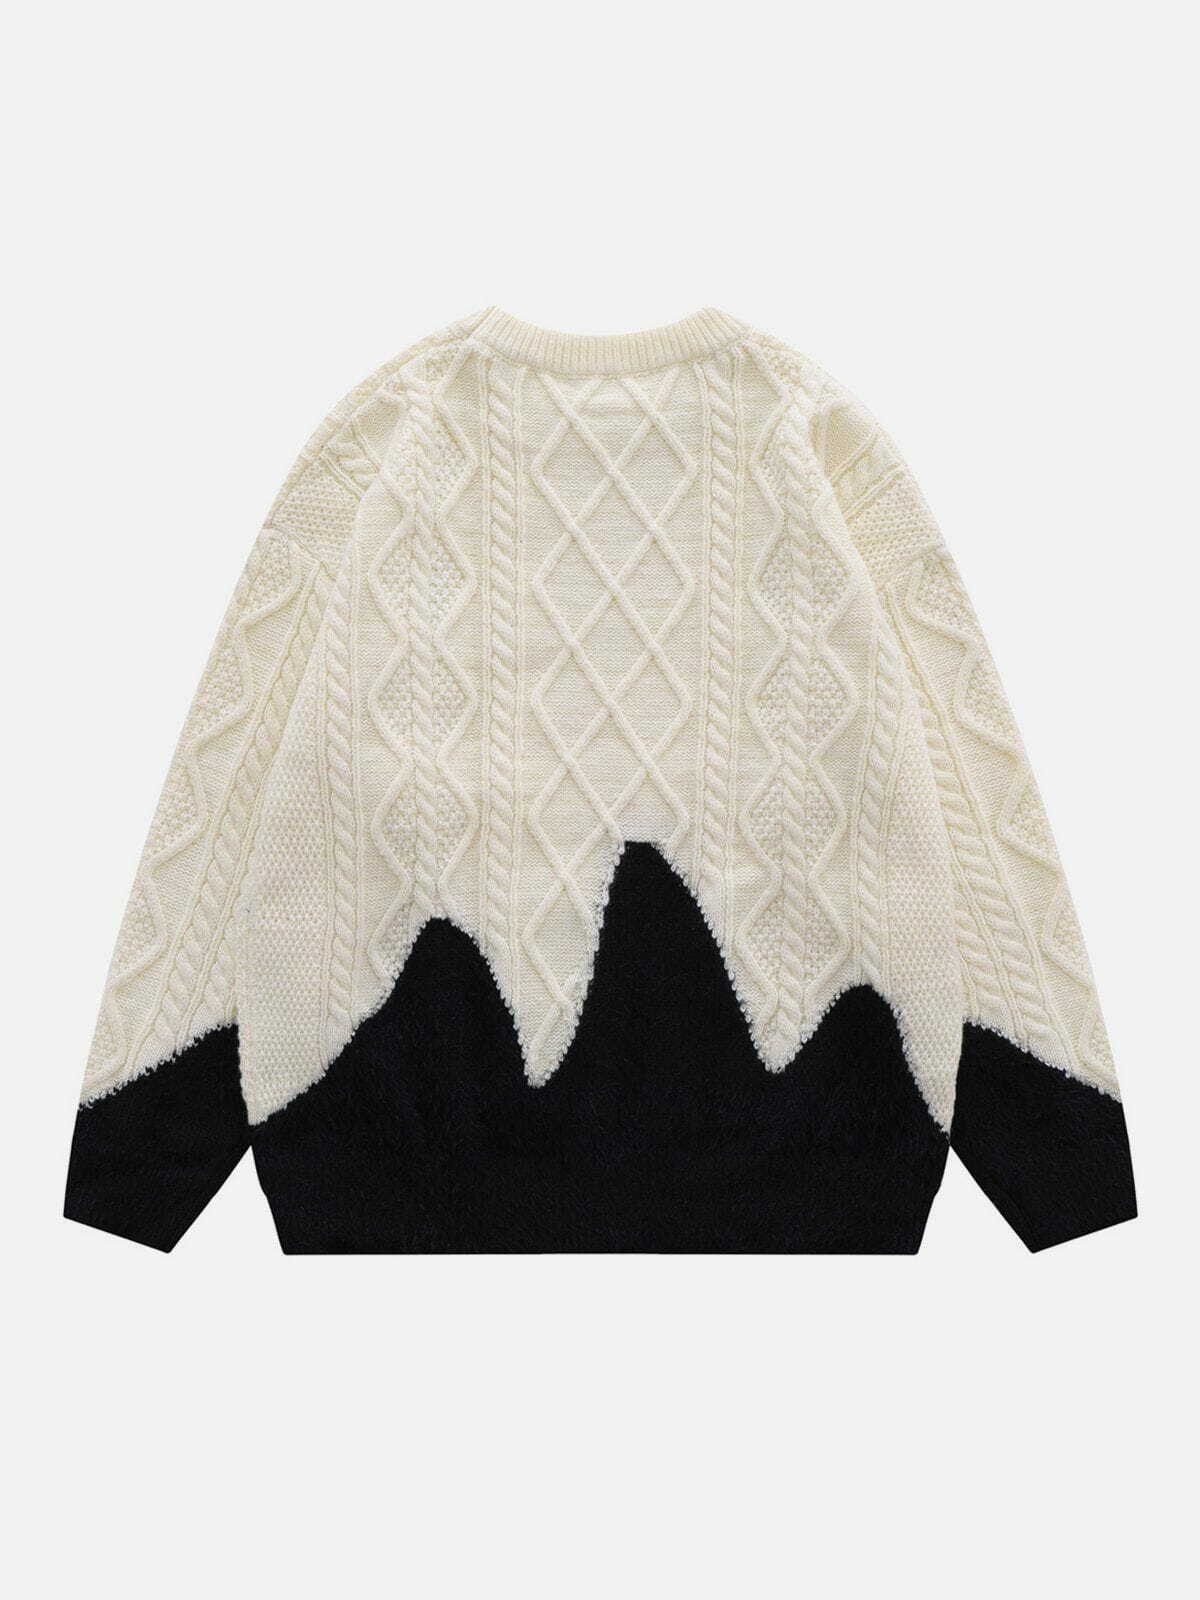 colorblock vintage sweater edgy y2k fashion icon 3138